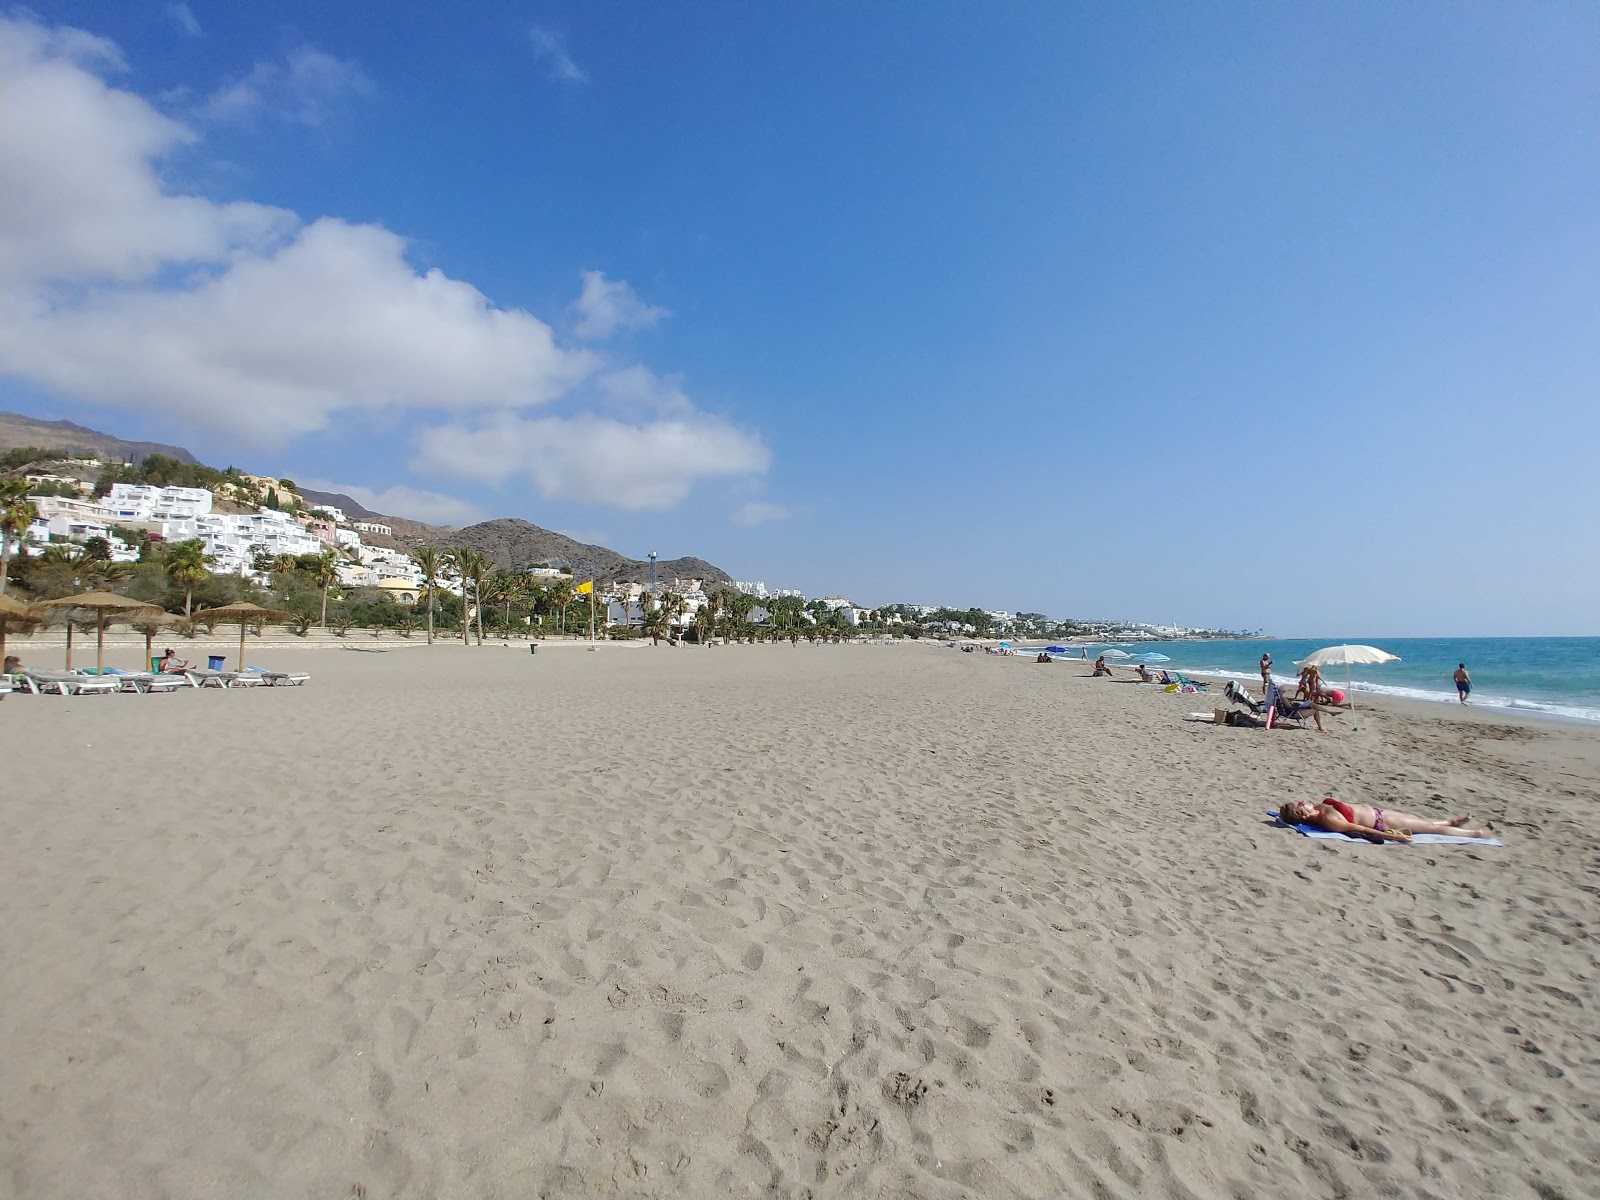 Foto di Playa de la Mena con una superficie del sabbia luminosa